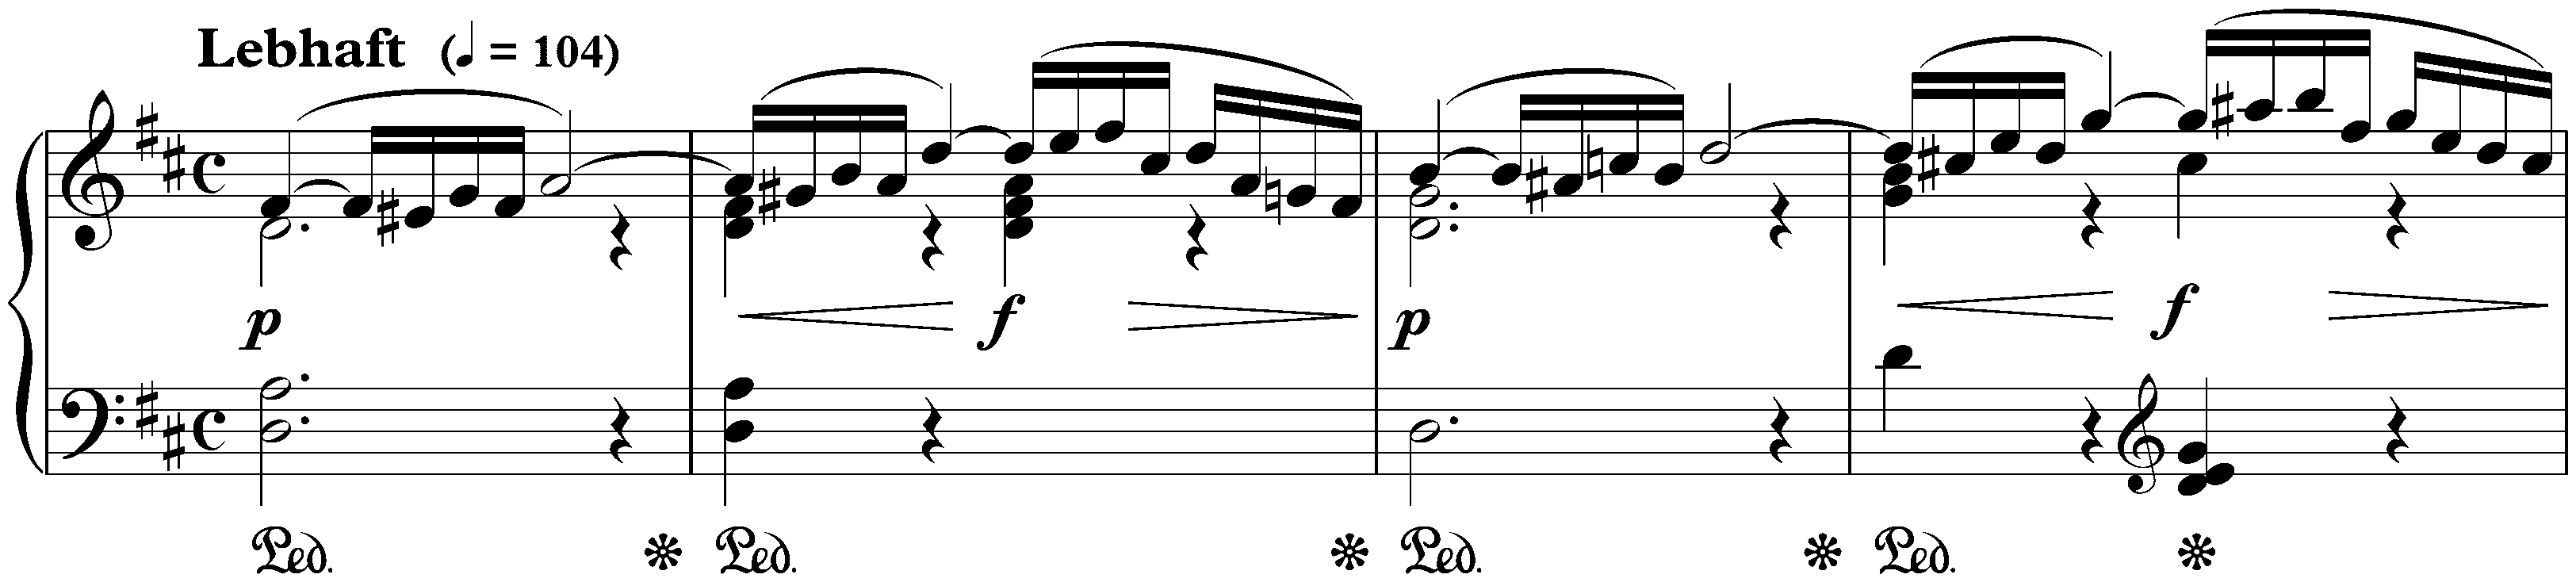 Sonate für die Jugend in D major, op. 118 no. 2; 1. Lebhaft